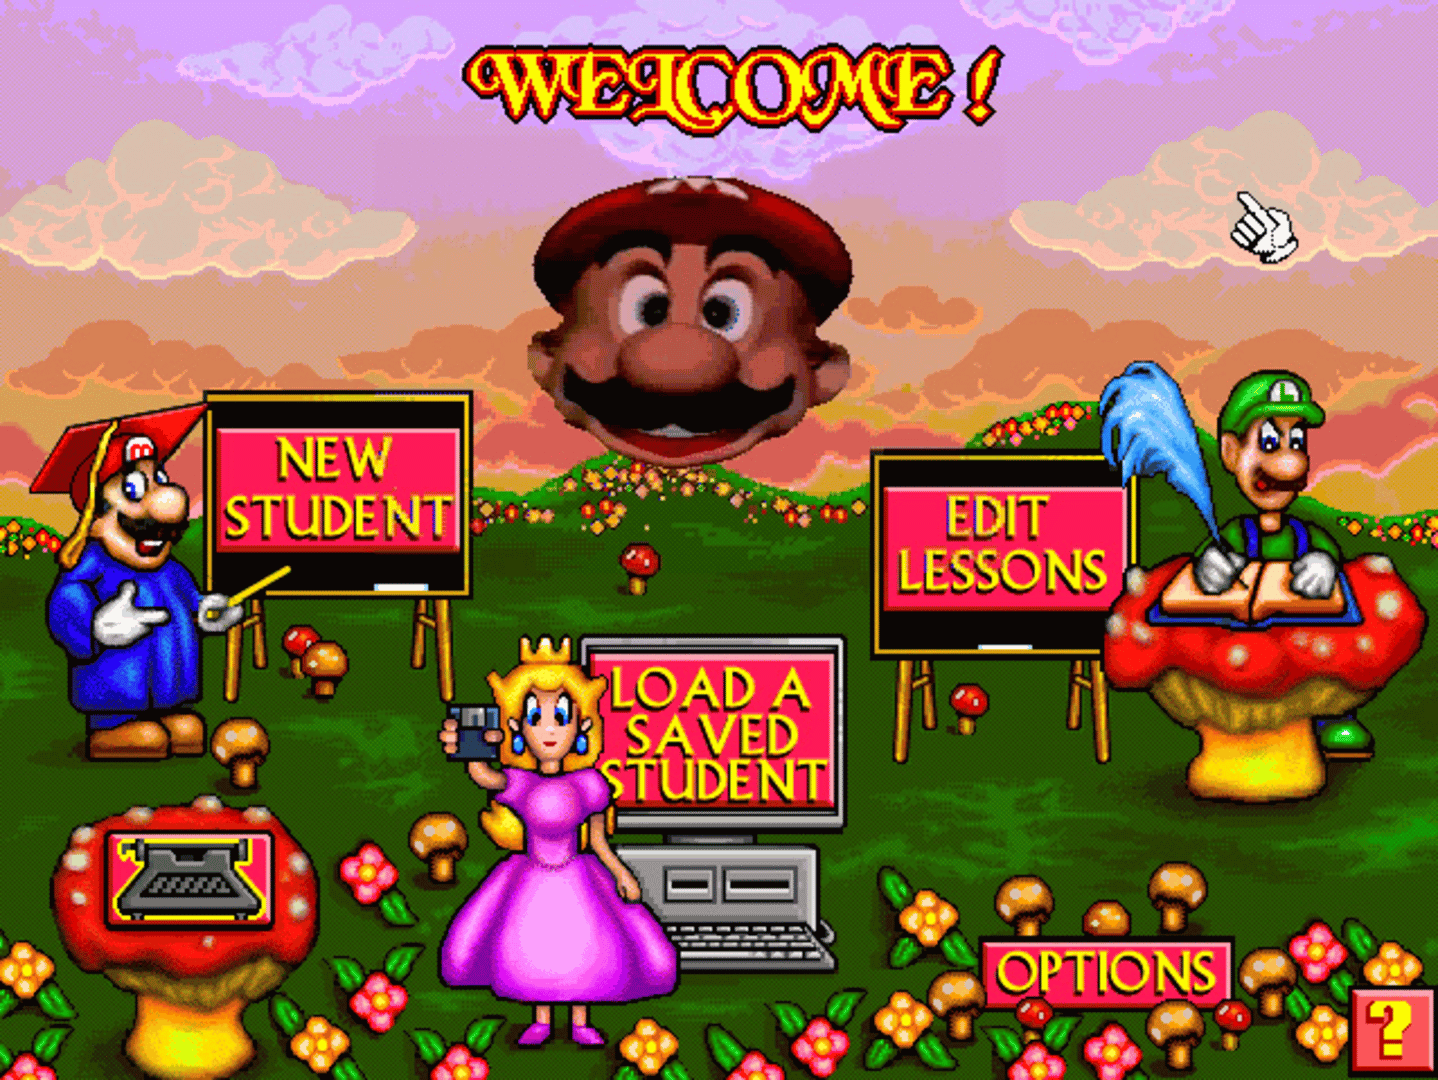 Mario Teaches Typing 2 screenshot